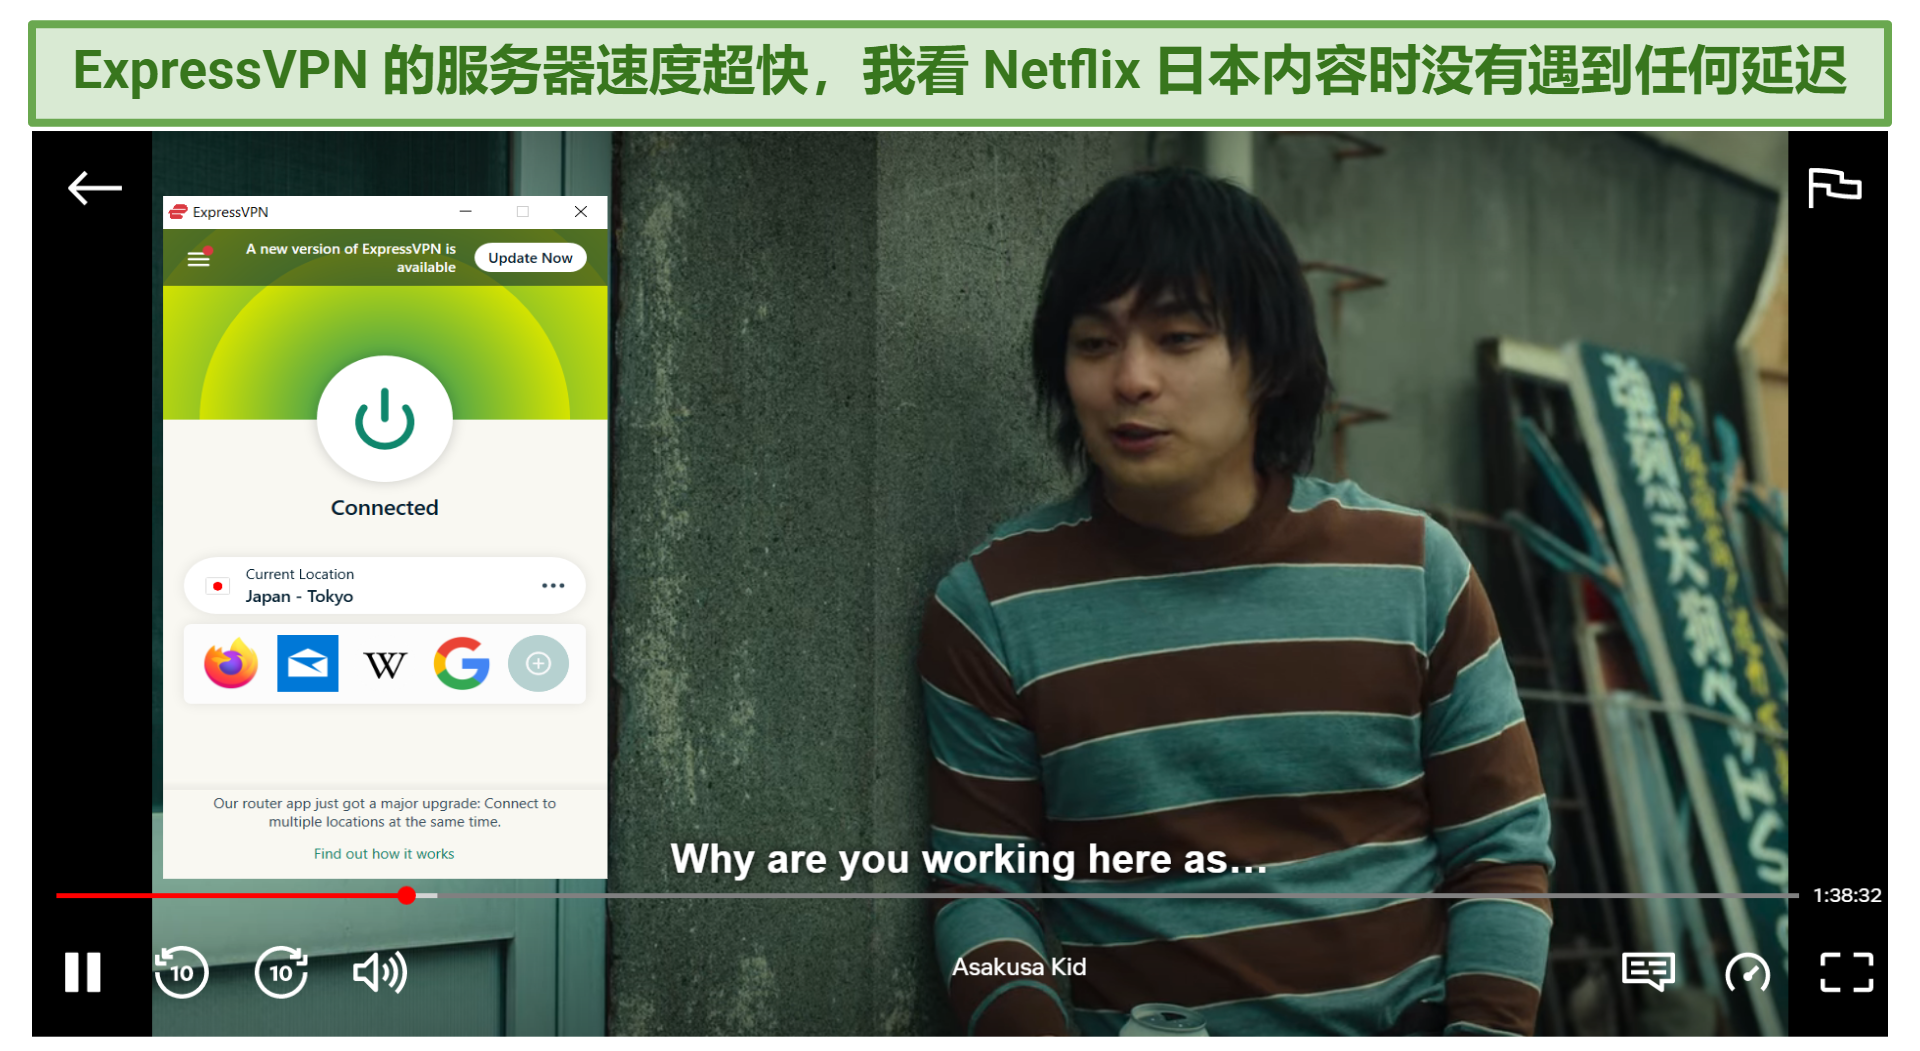 screenshot of Netflix Japan streaming Asakusa Kid with ExpressVPN